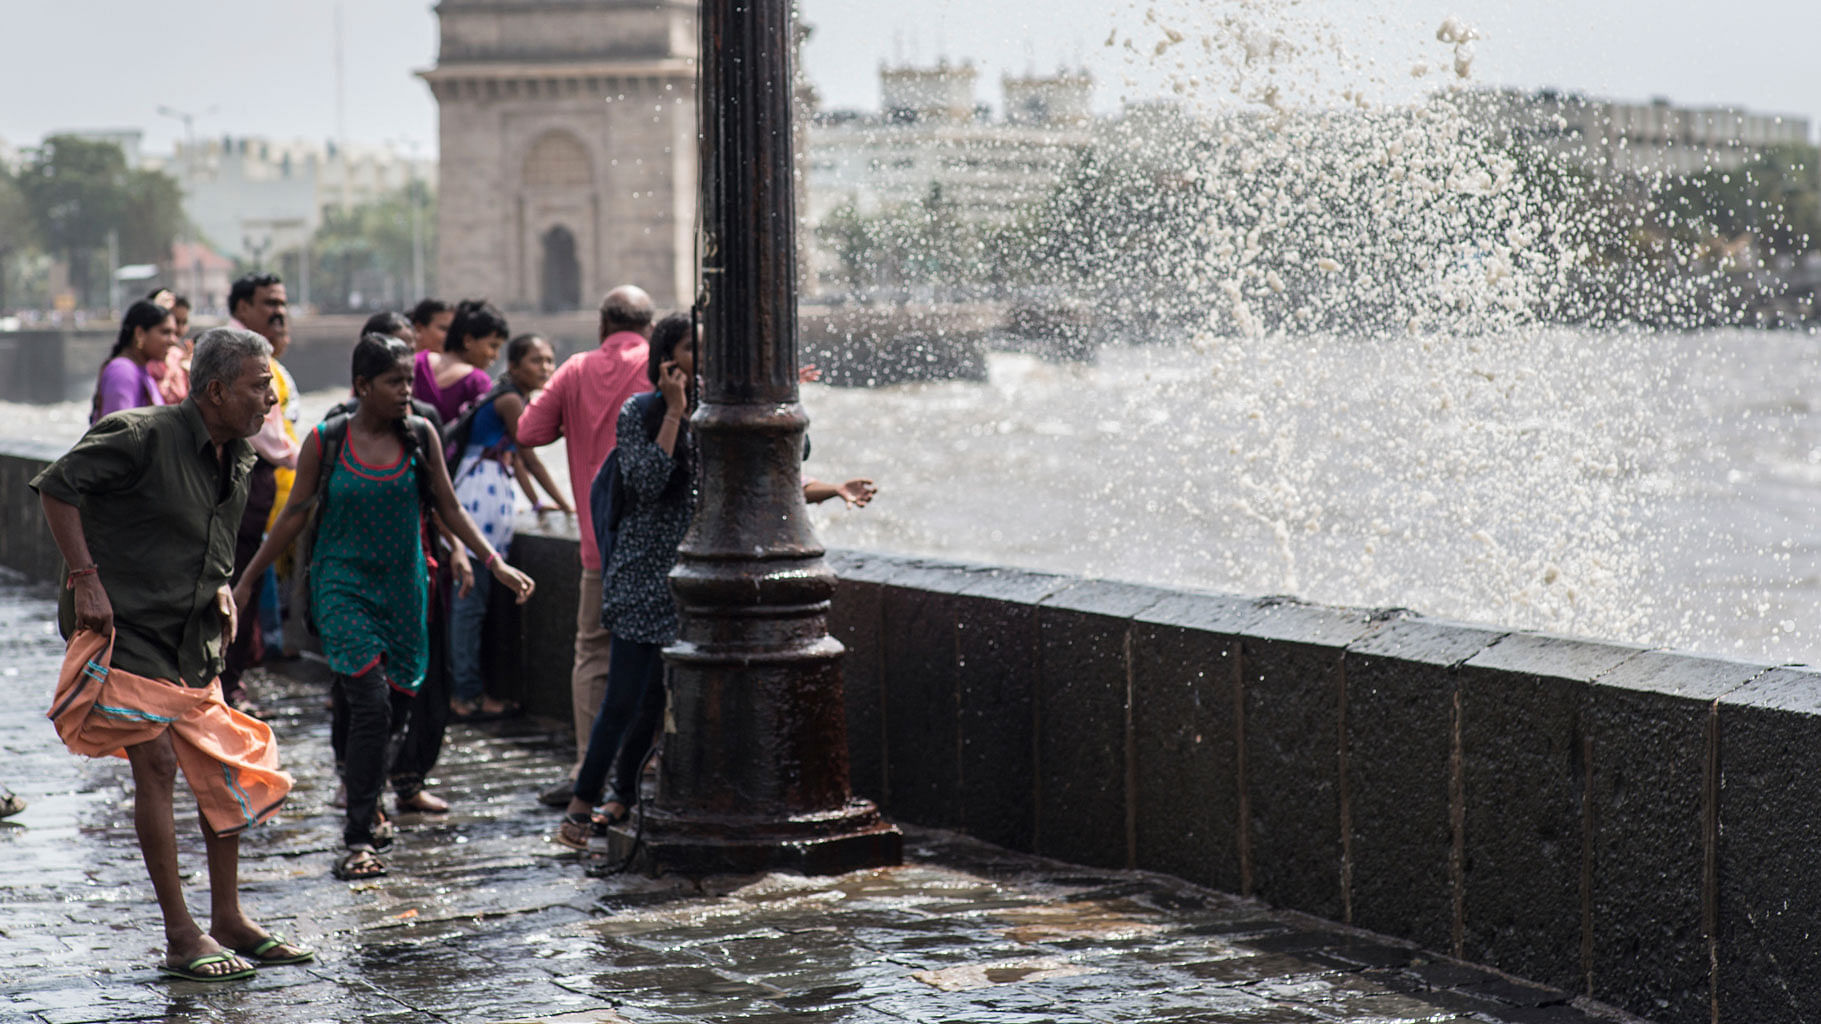 Monsoon has already arrived in Mumbai. (Photo: IStockPhoto)